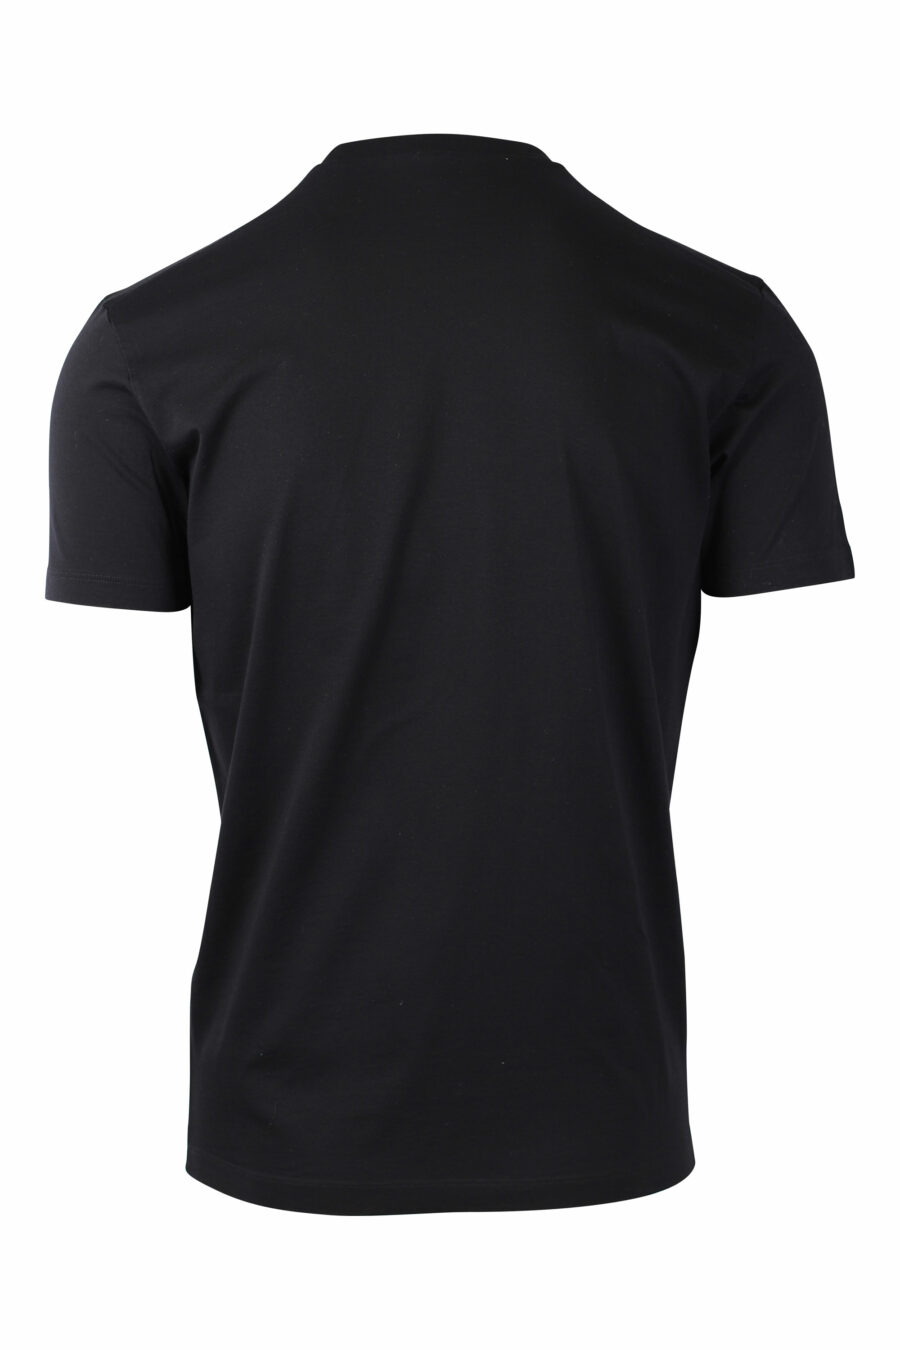 Black T-shirt with maxilogo leaf surfing - IMG 1463